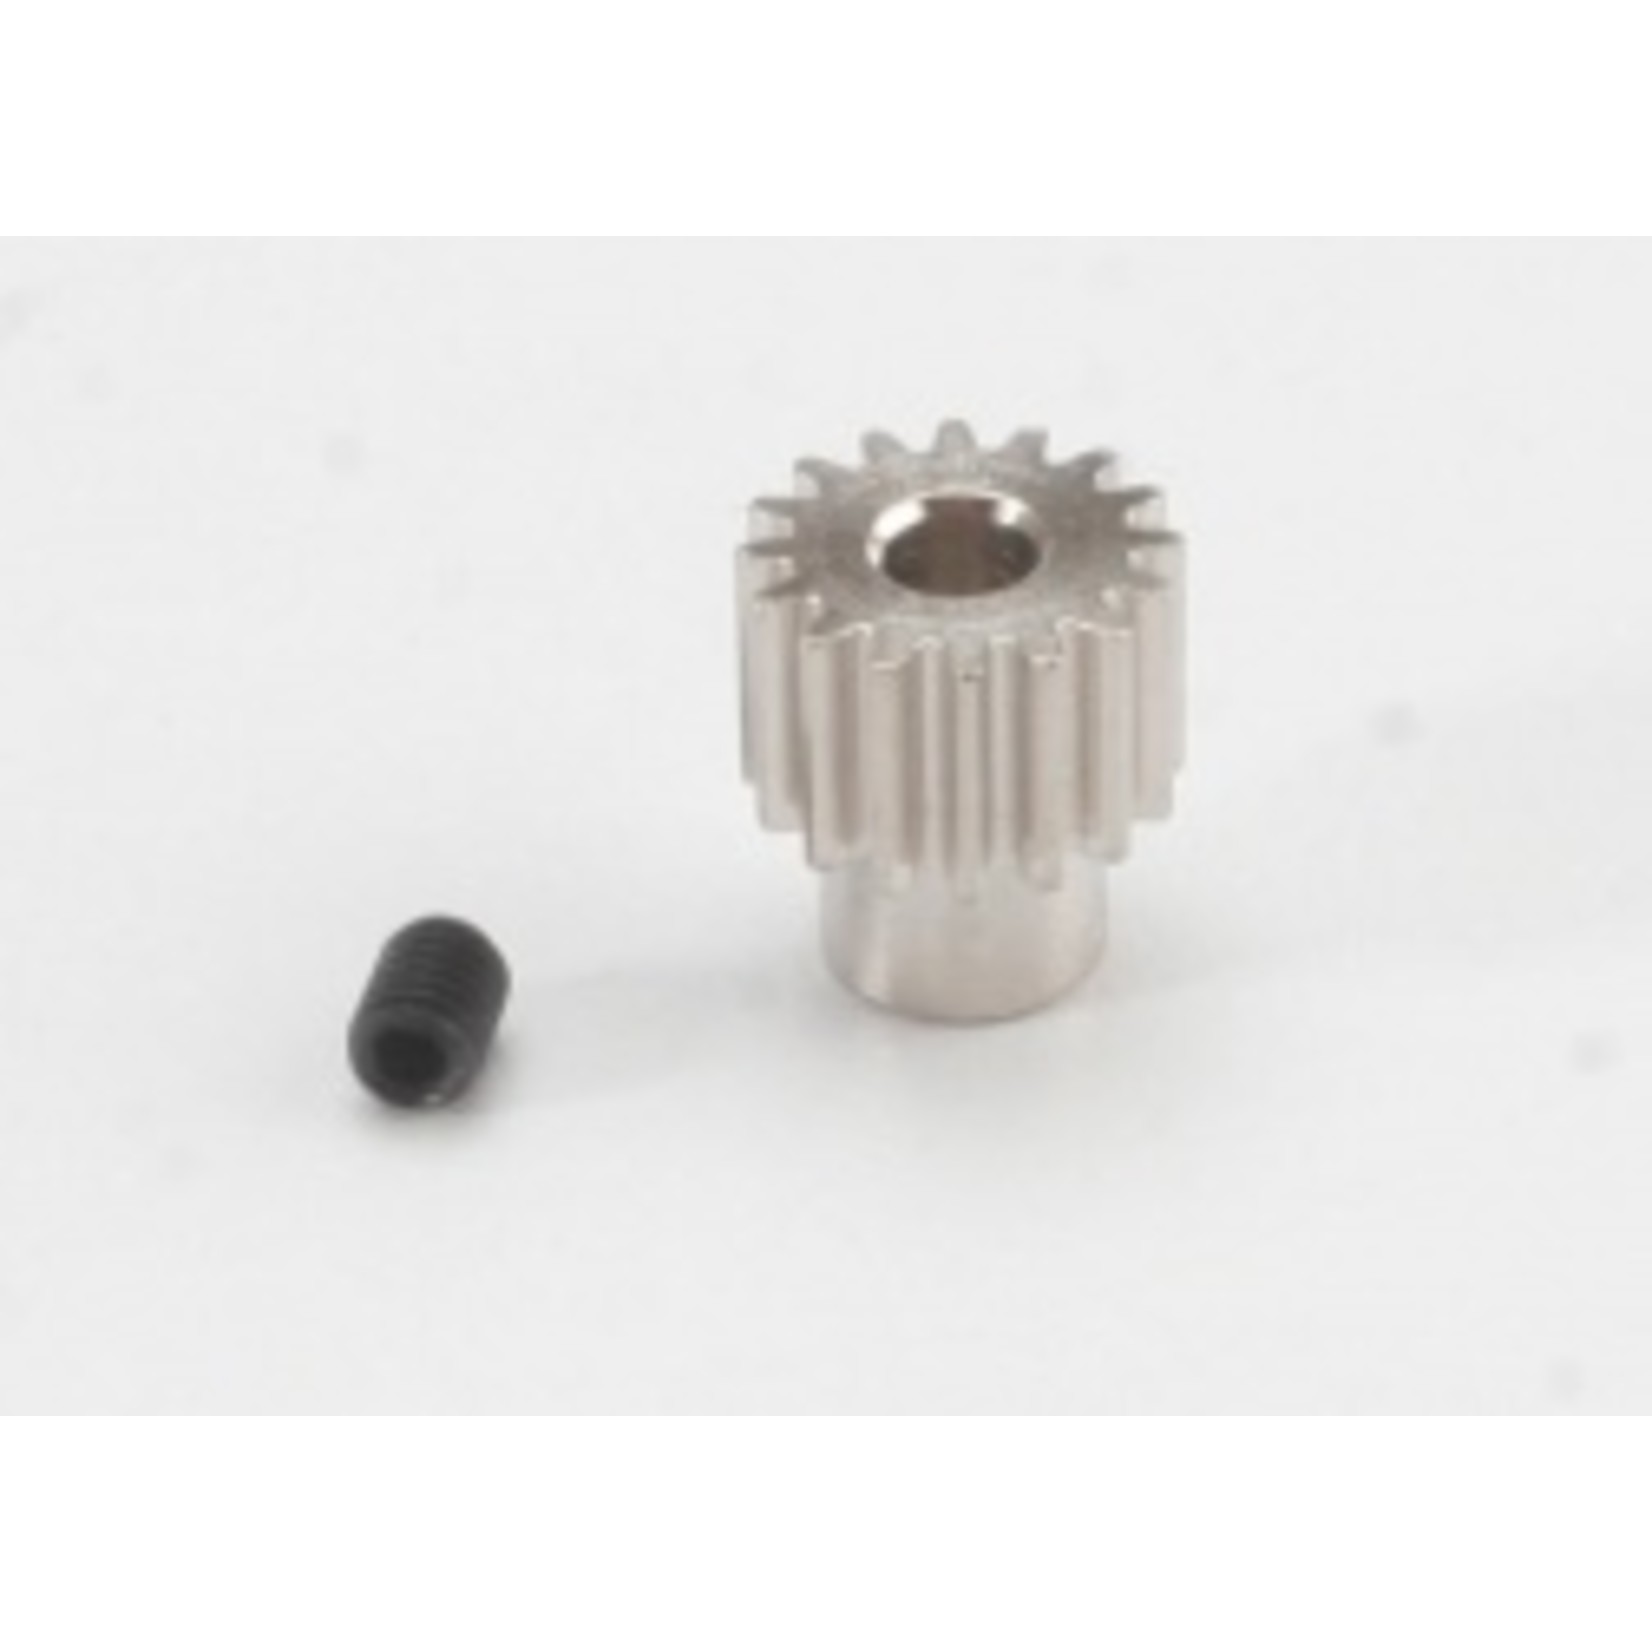 Traxxas 2416 Gear, 16-T pinion (48-pitch) / set screw